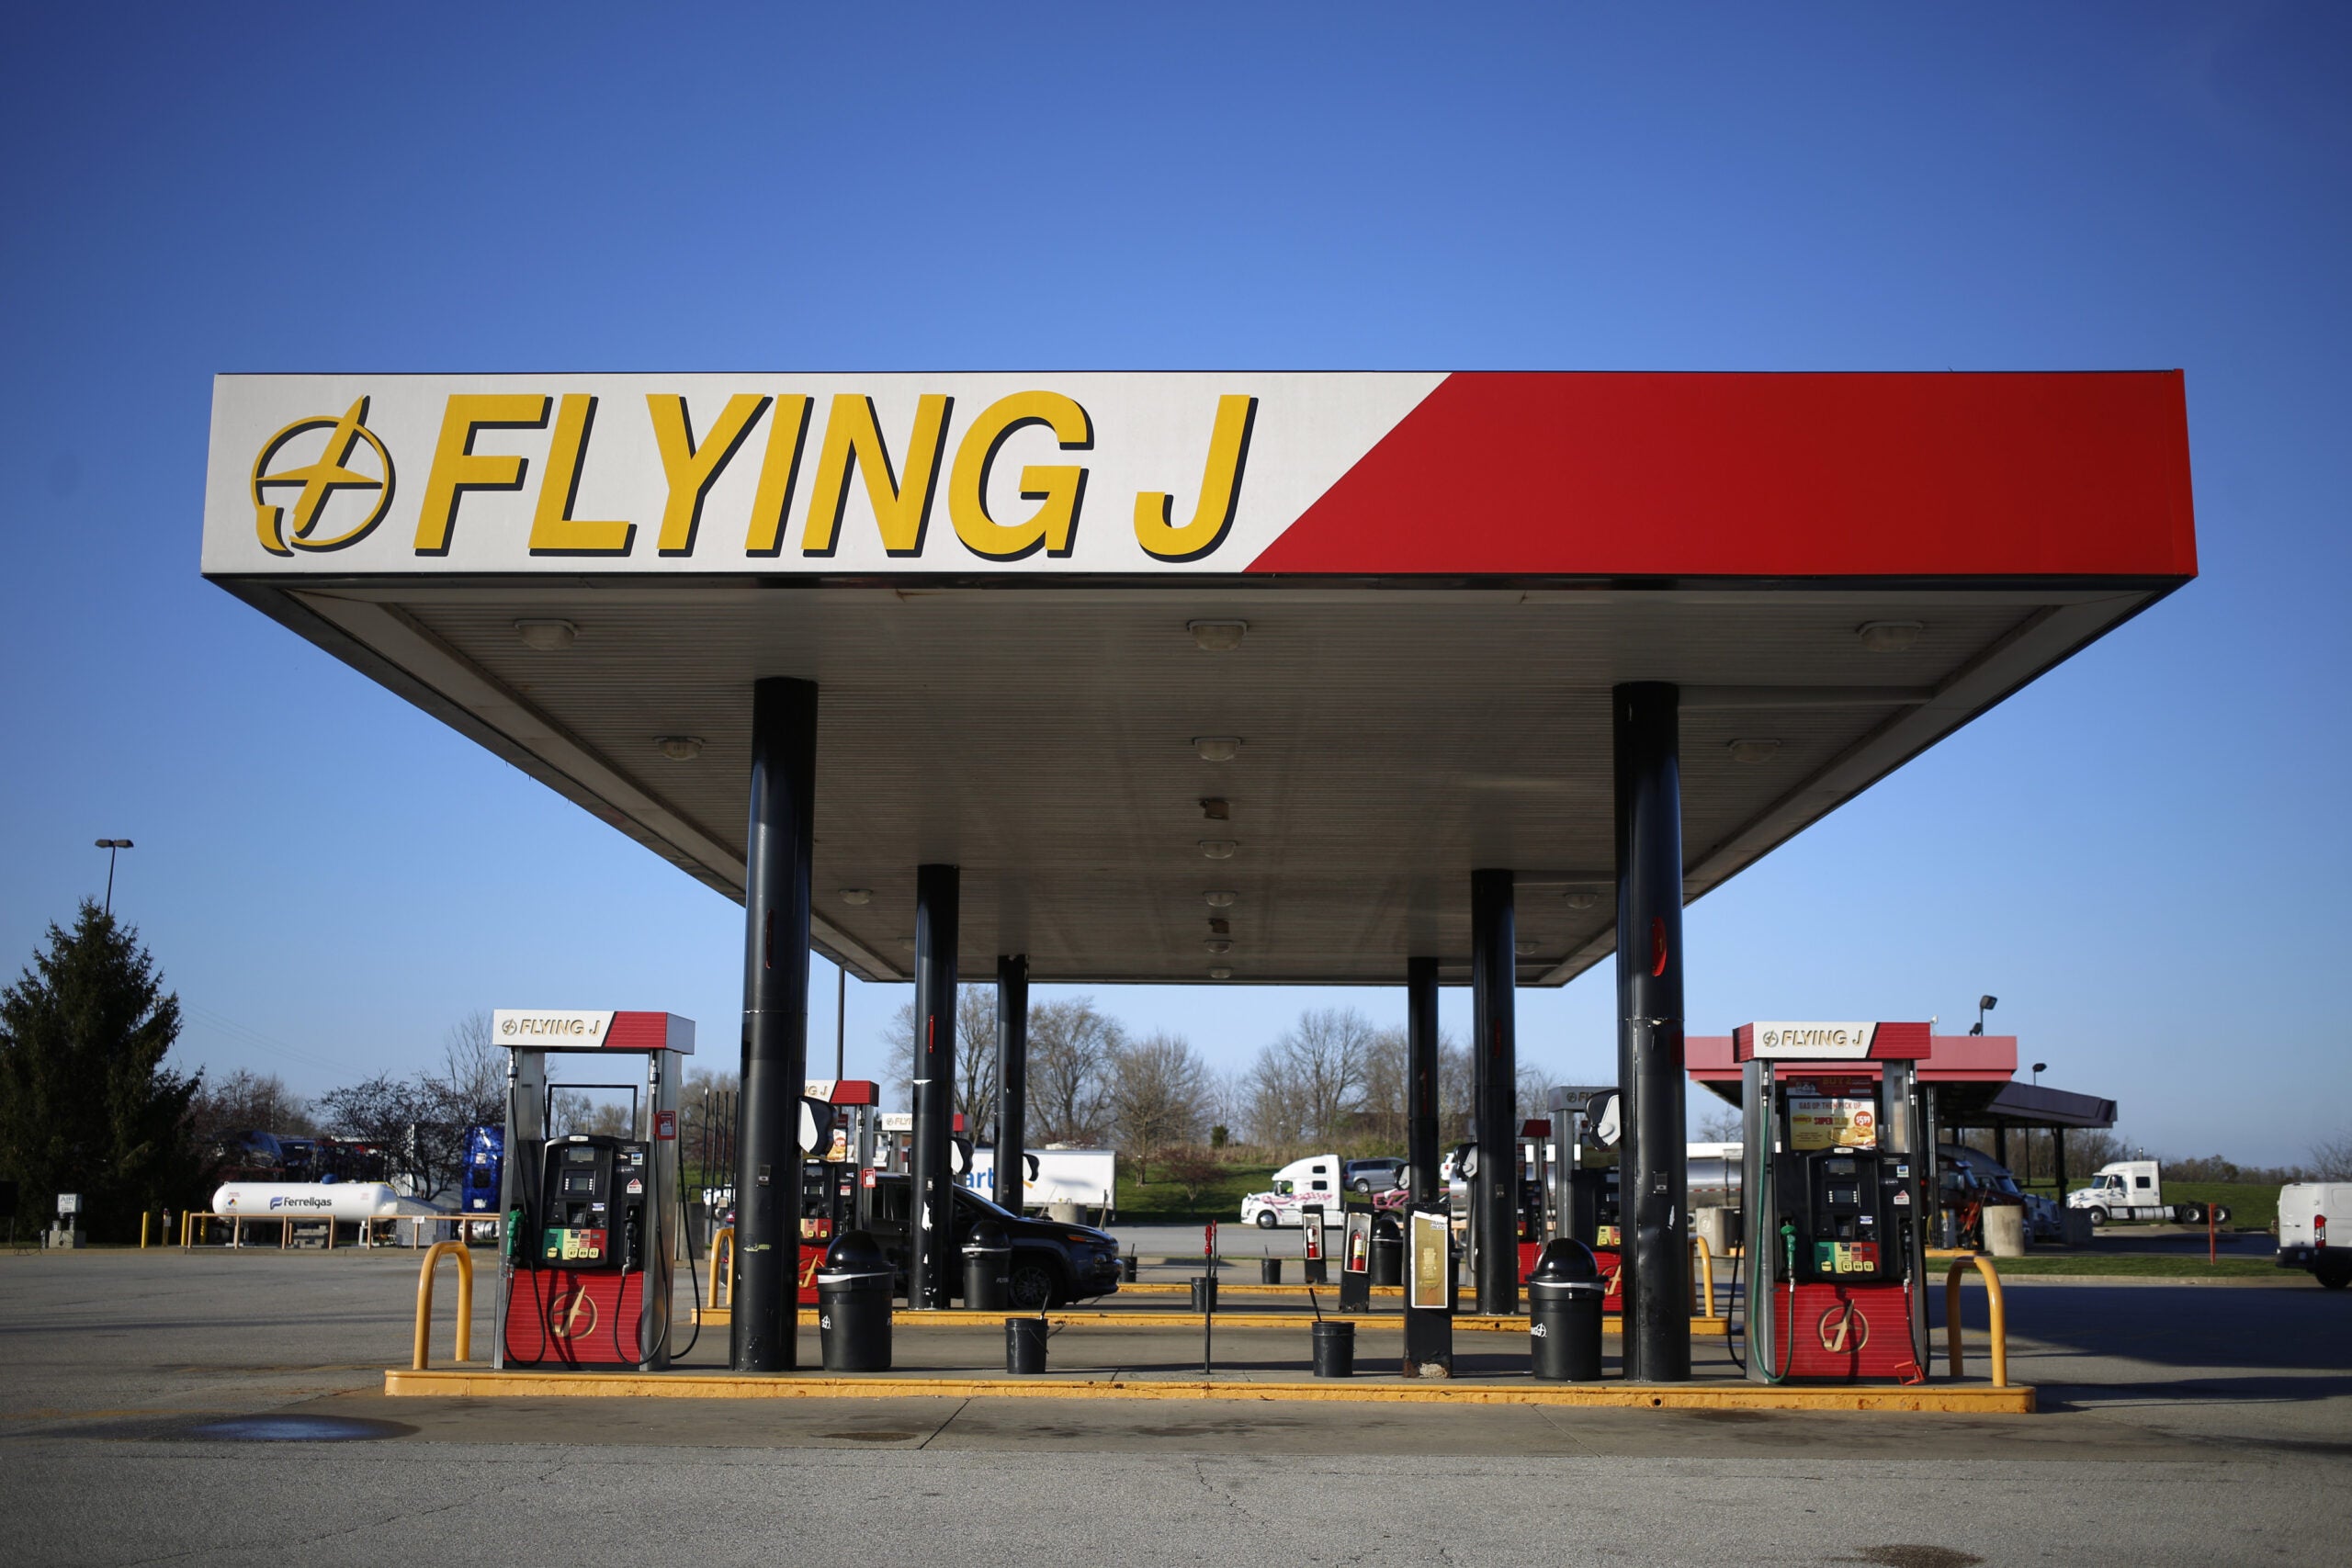 Flying J gas station